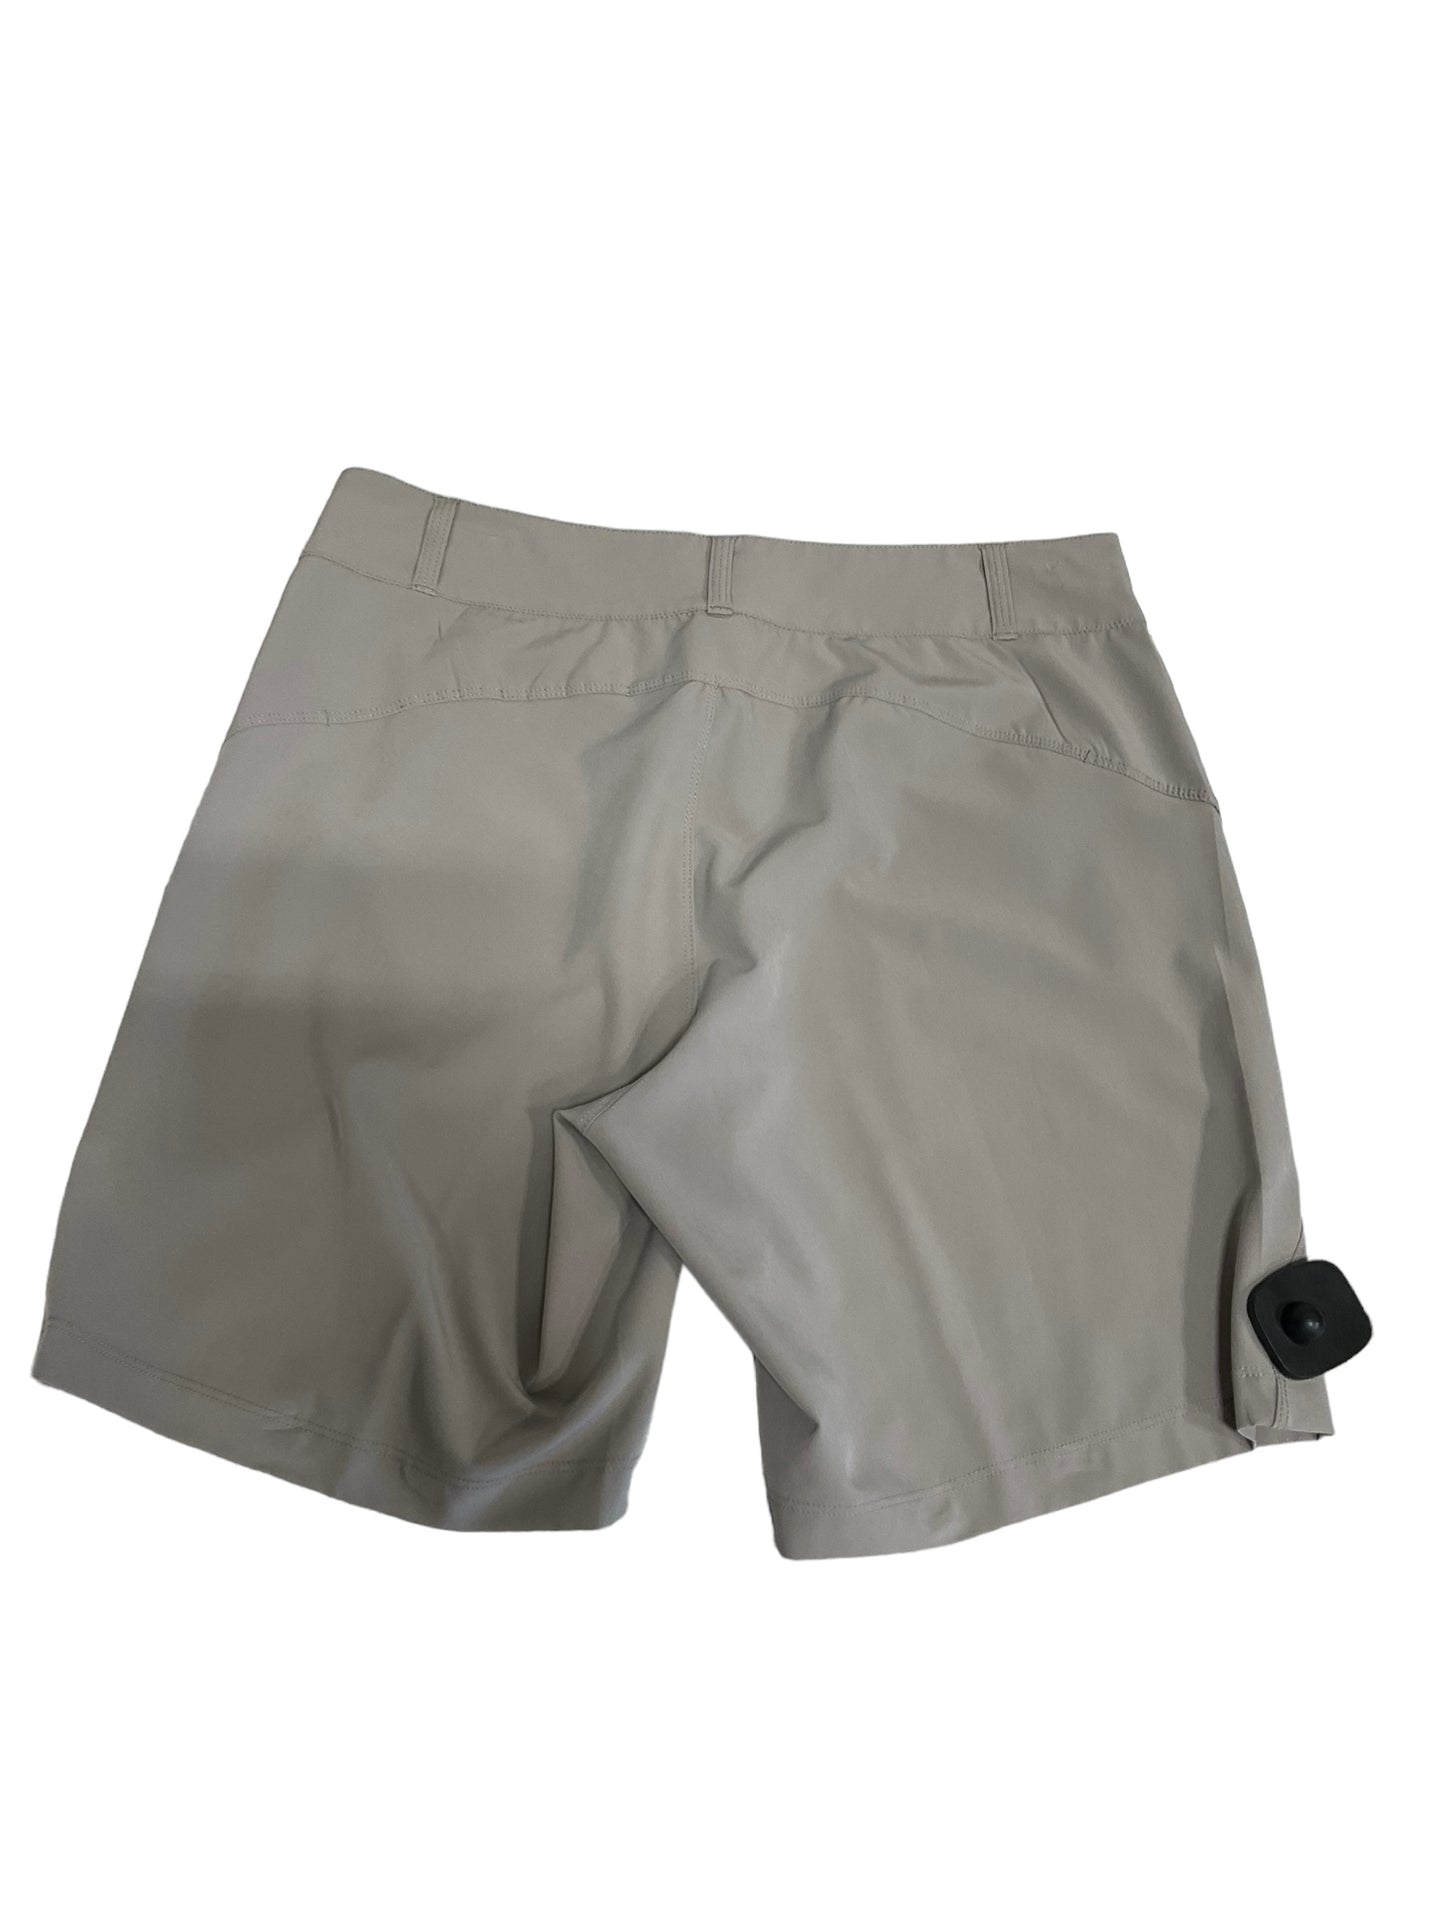 Athletic Shorts By Kyodan  Size: S